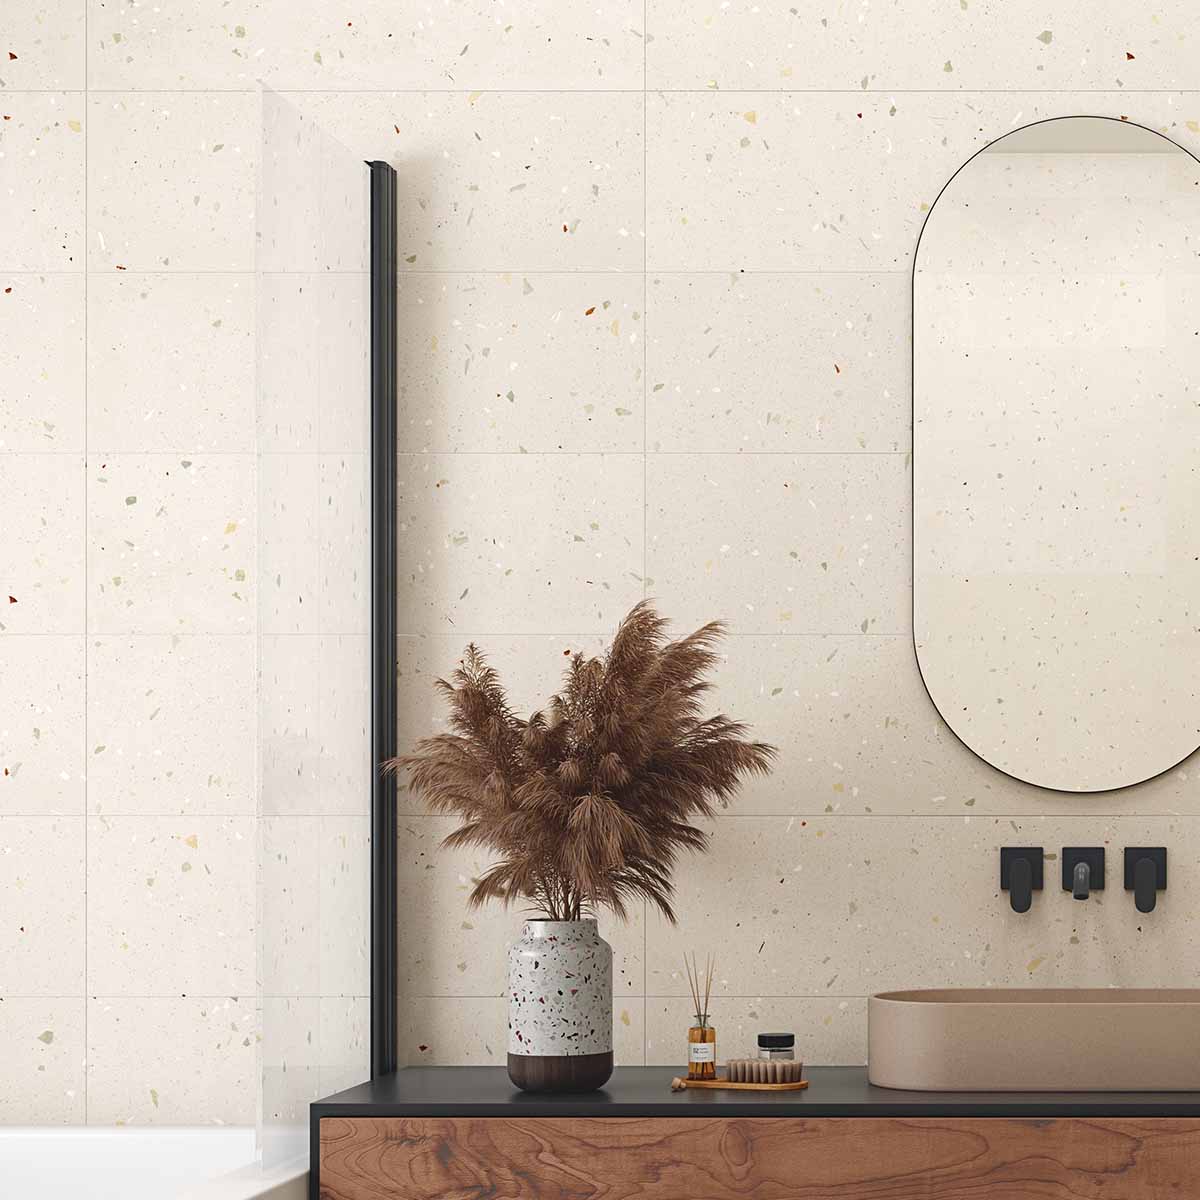 arcana croccante r topping menta terrazzo ceramic wall tile 32x99cm lifestyle deluxe bathrooms ireland